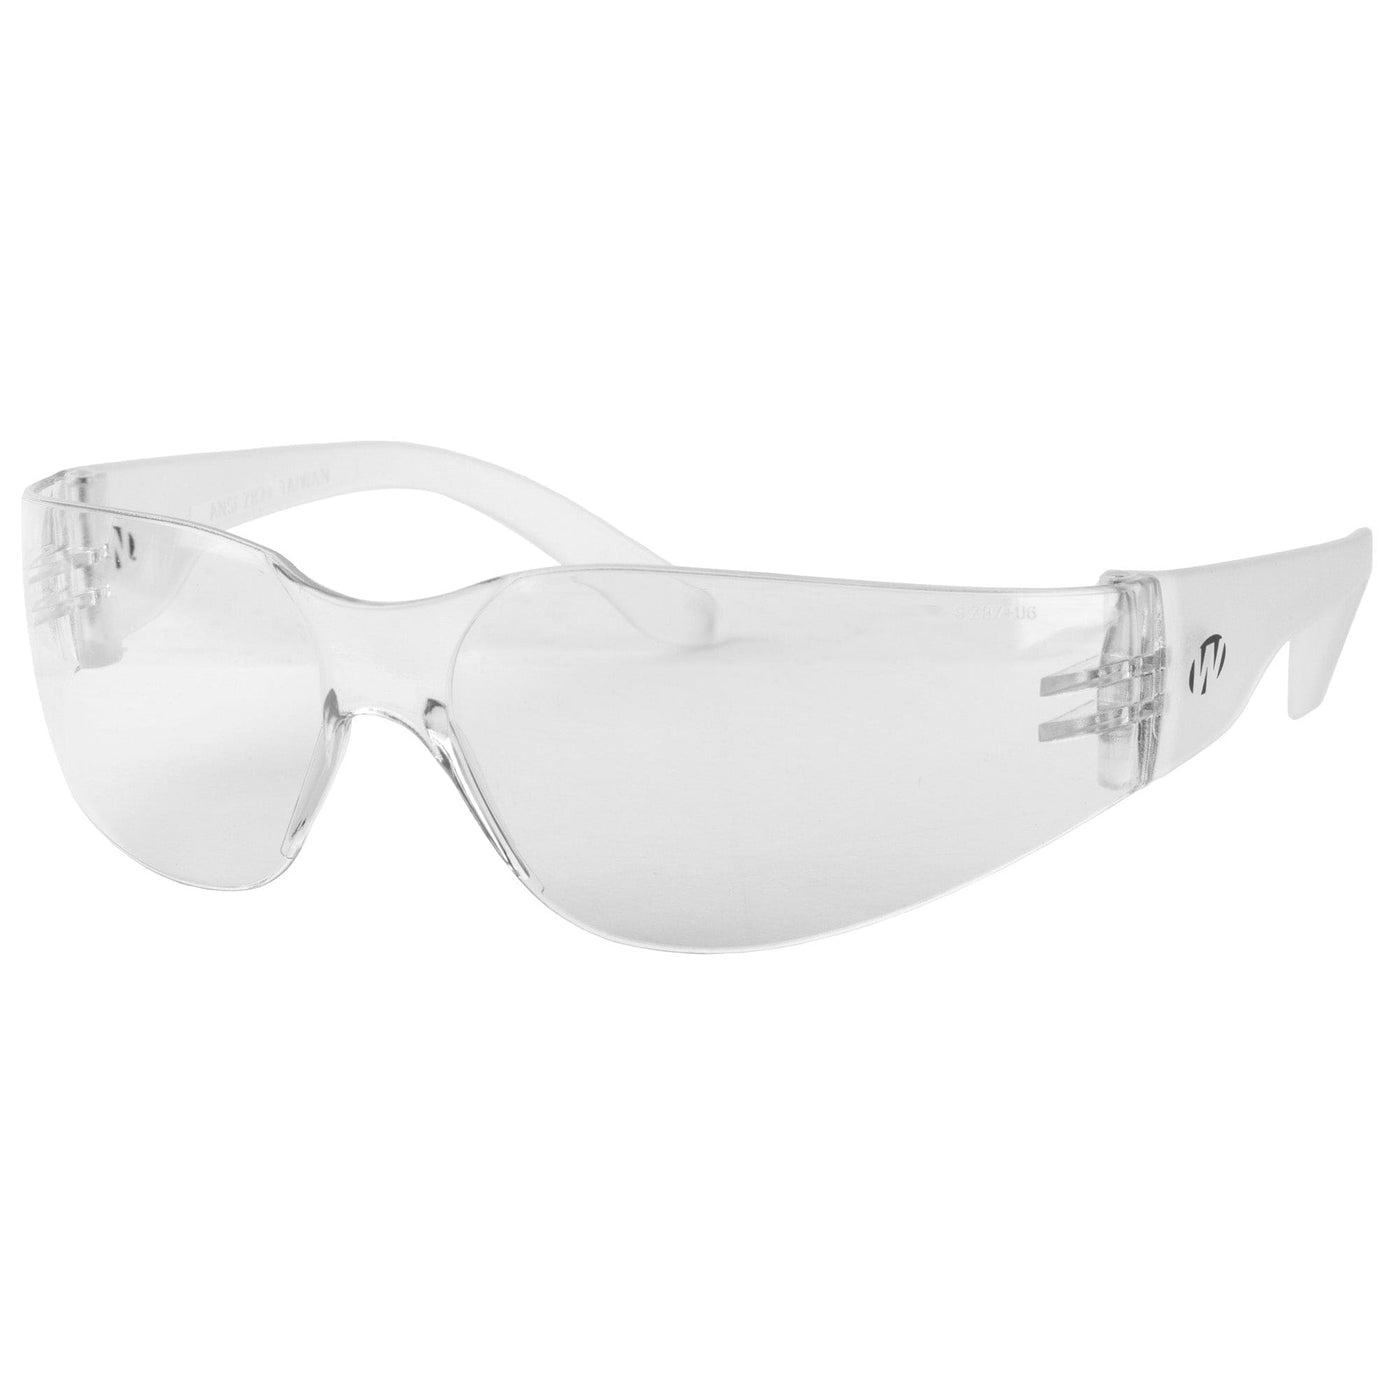 Walker's Walker's Wrap Sprt Glasses Clr Safety/Protection